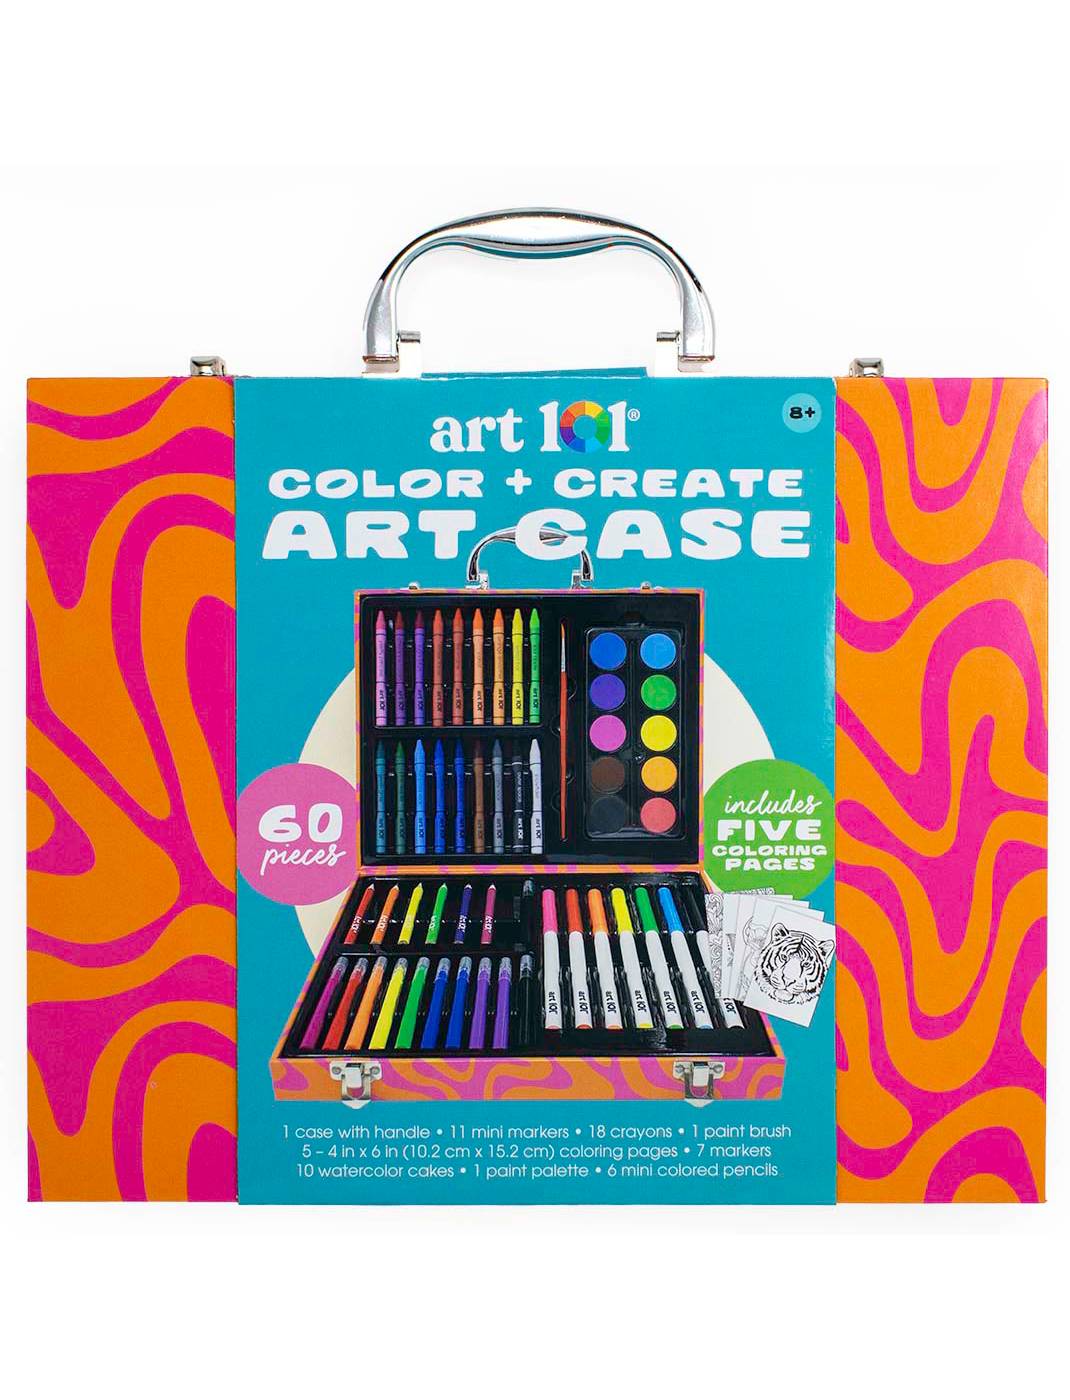 Art 101 Color & Create Art Case; image 1 of 8